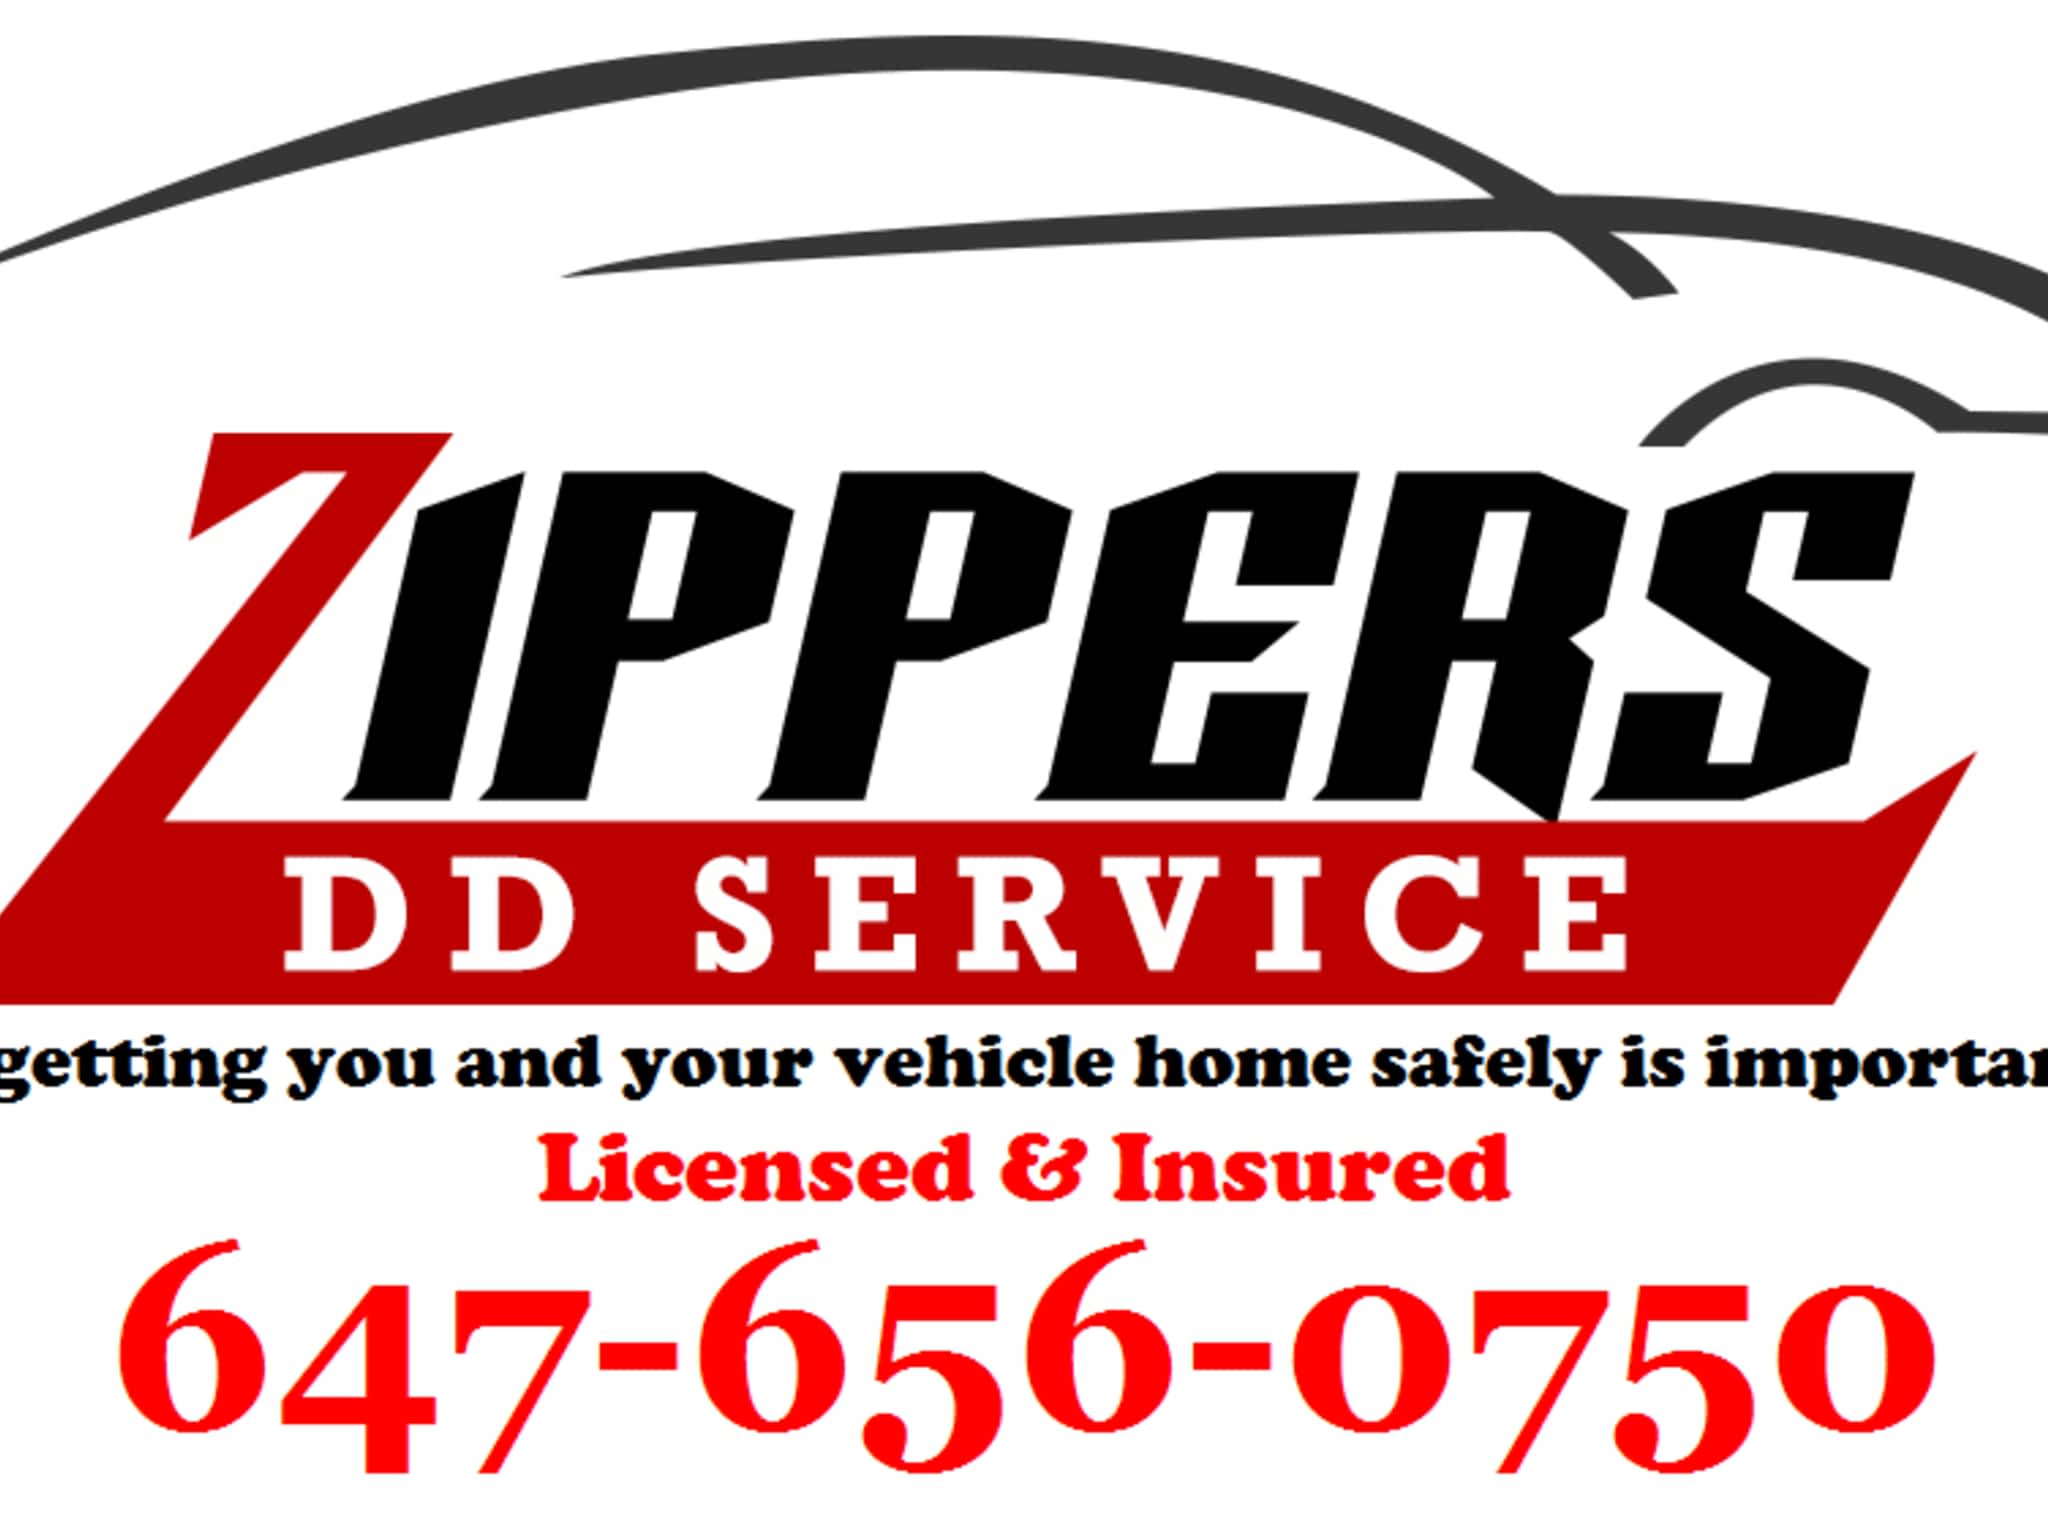 photo Zippers DD Designated Driver Service